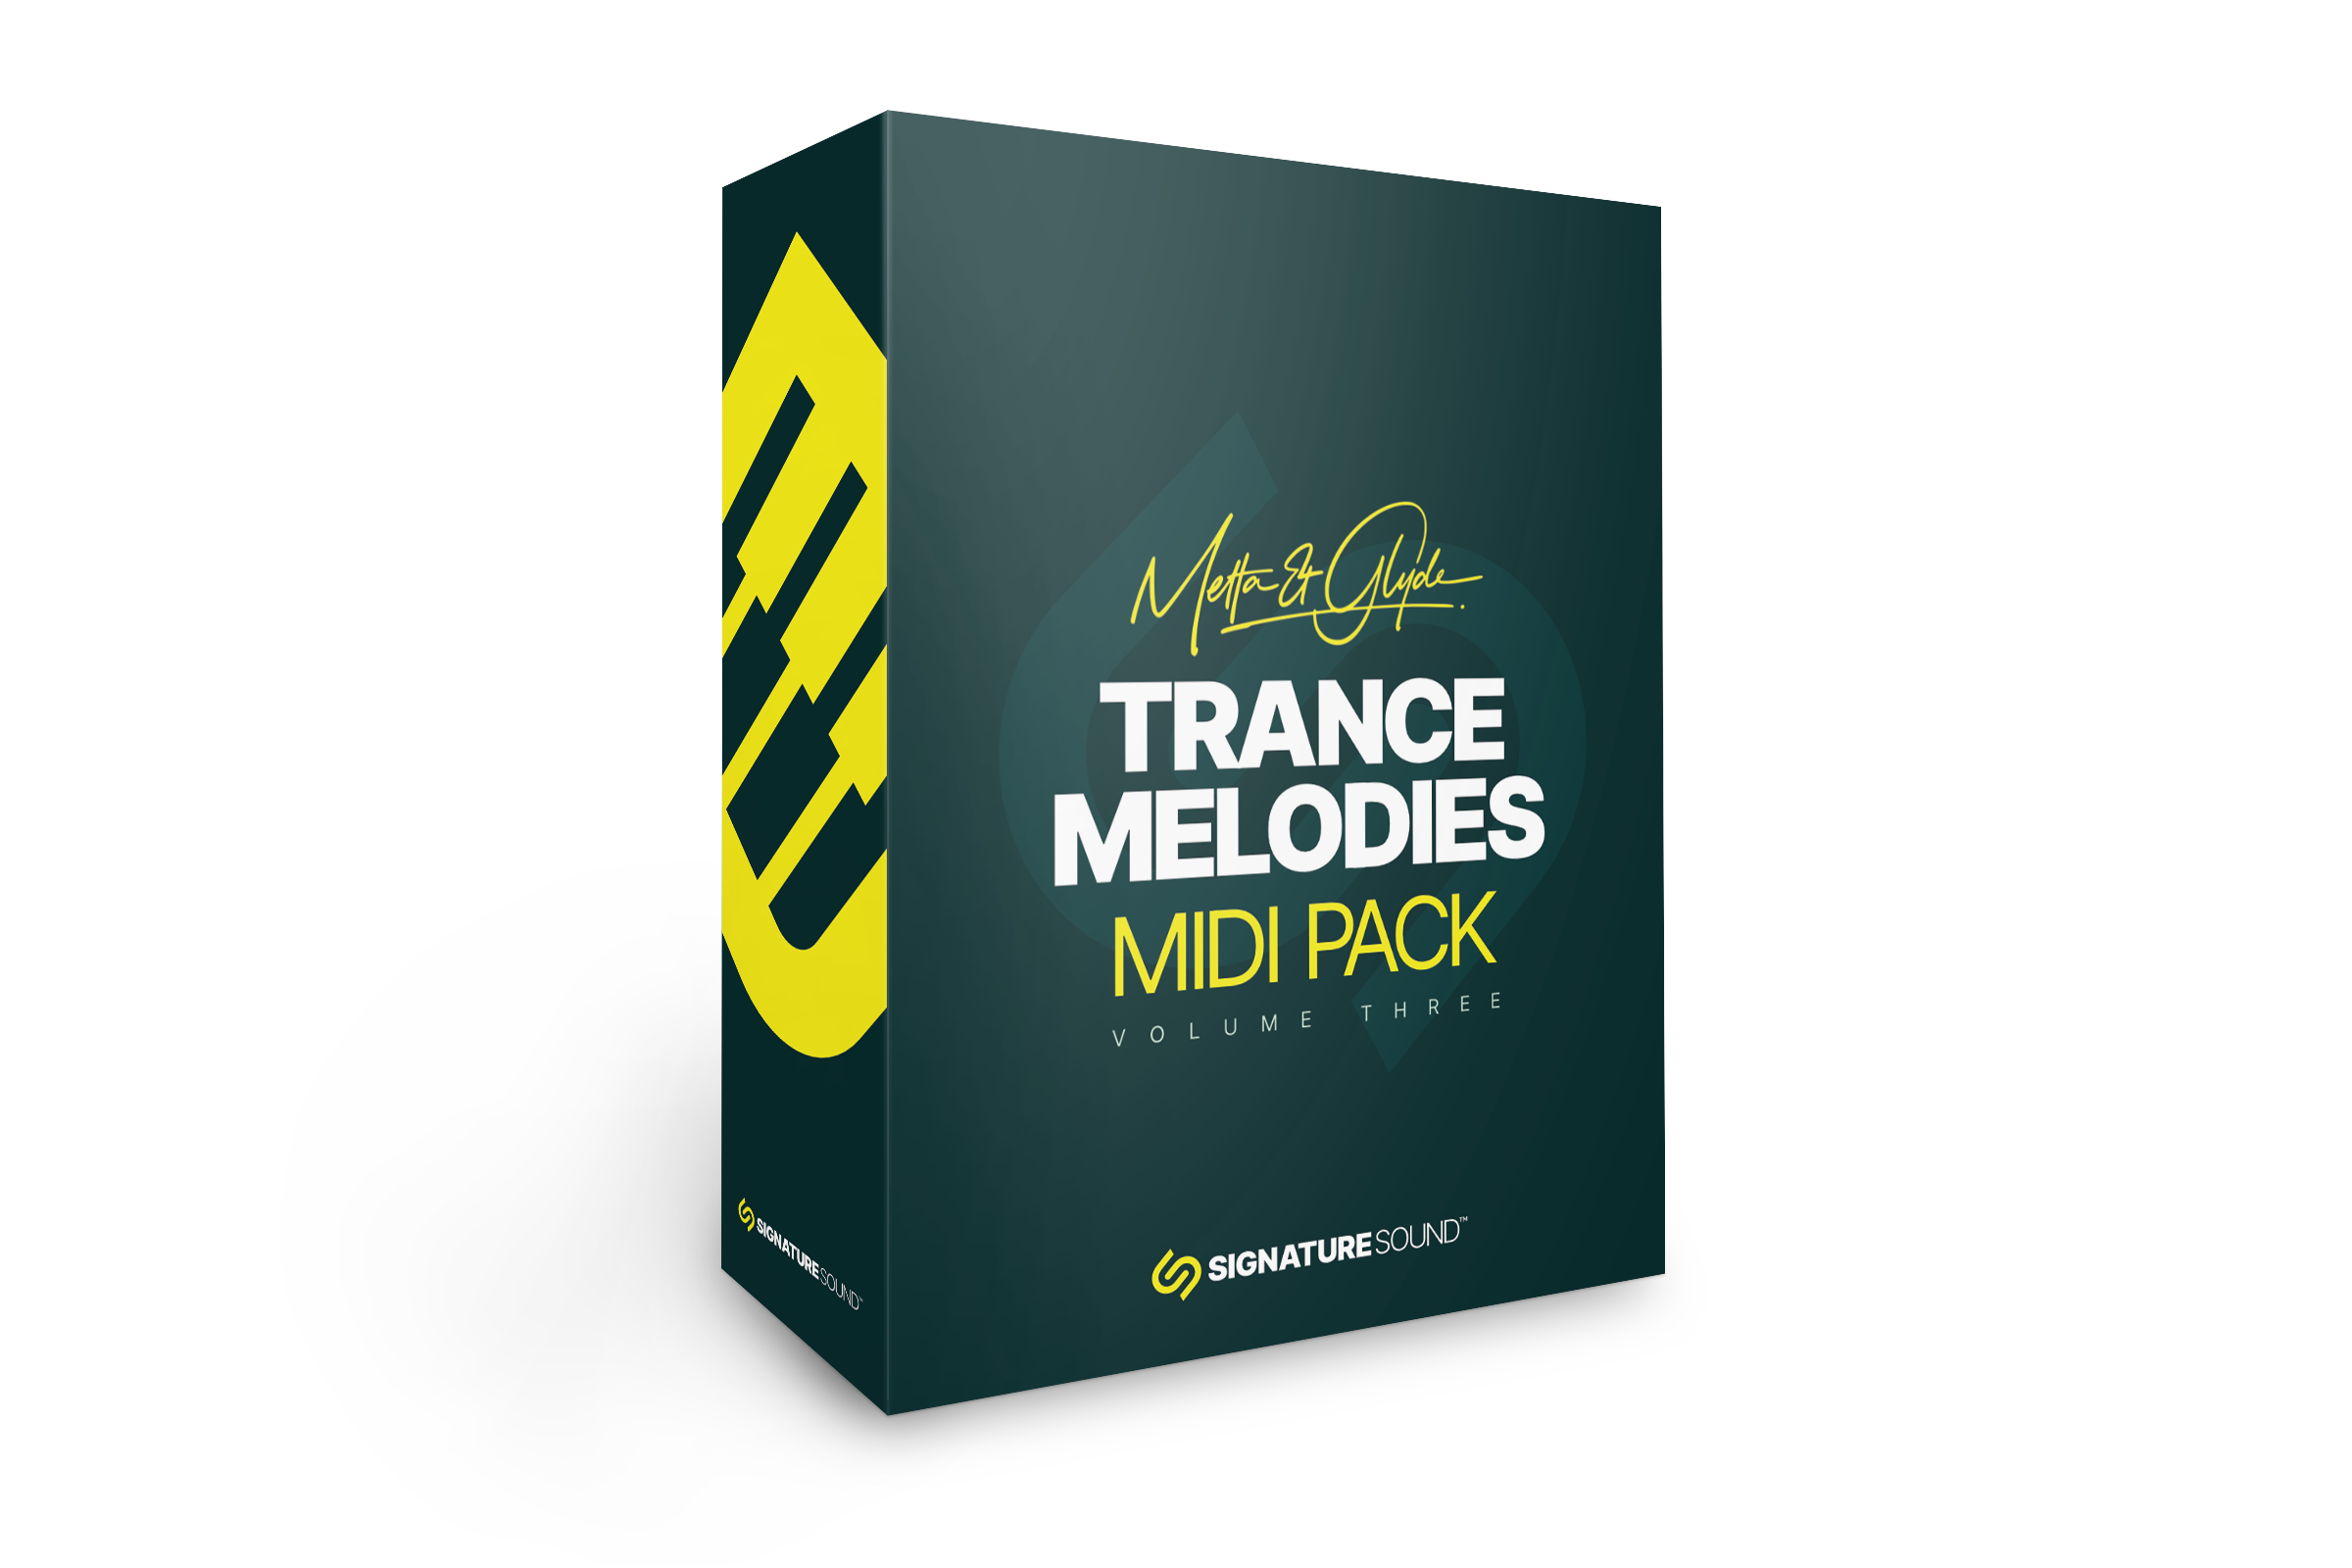 Metta & Glyde Trance Melodies [Midi Pack] Volume Three